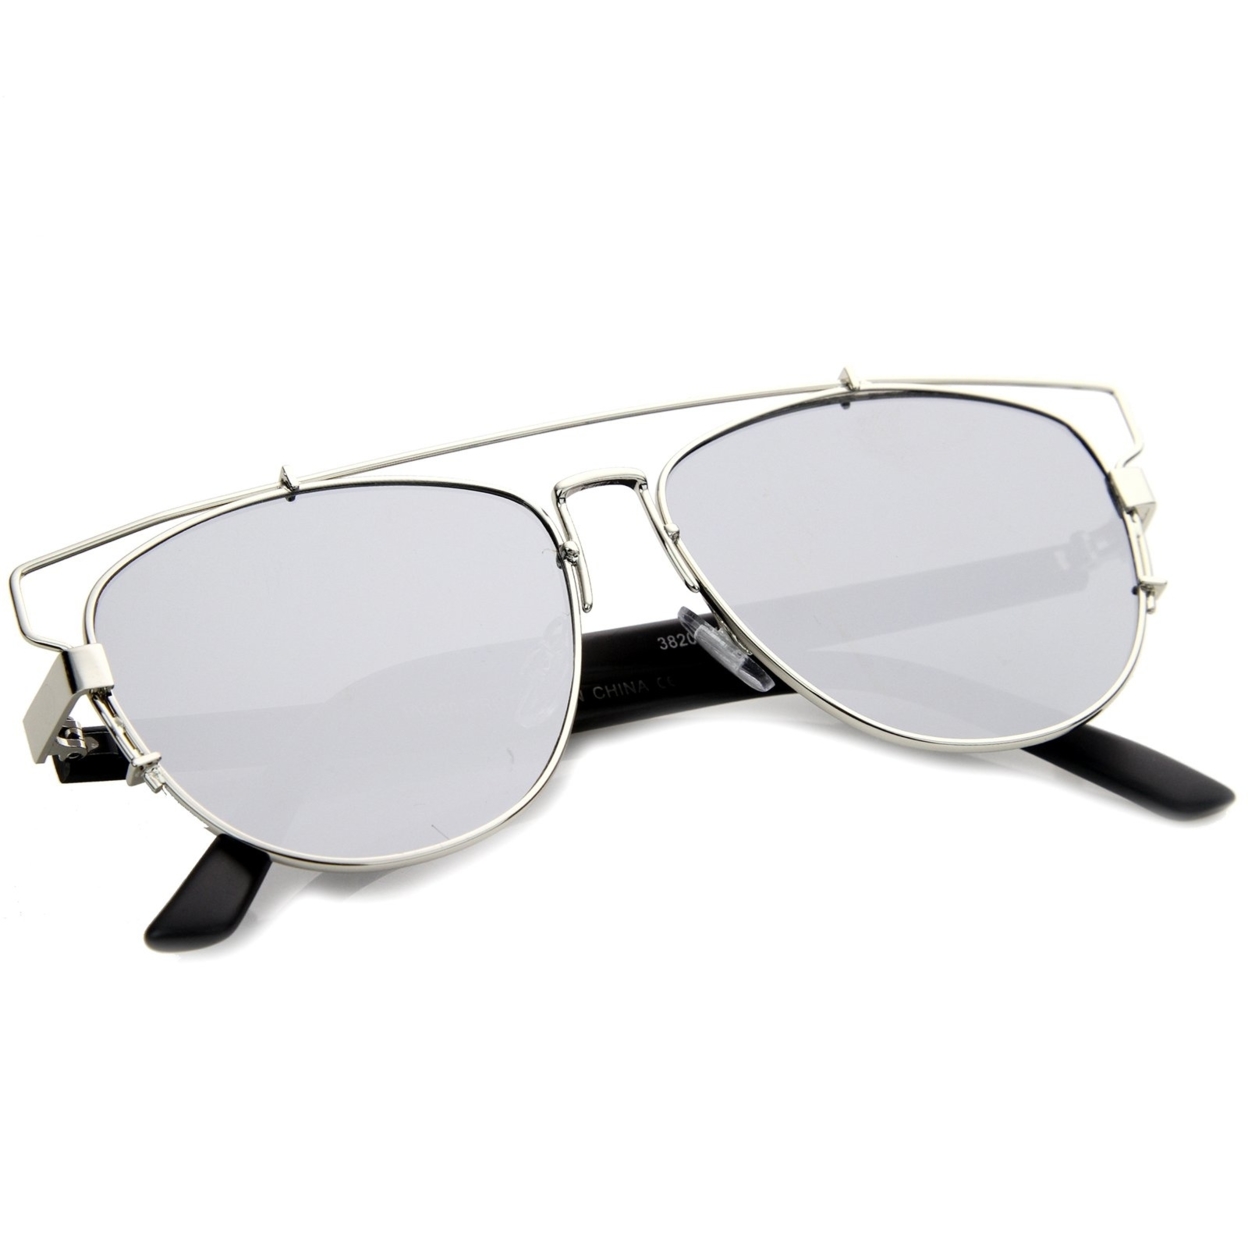 Technologic Full Metal Crossbar Flash Mirror Flat Lens Aviator Sunglasses 54mm - Silver / Silver